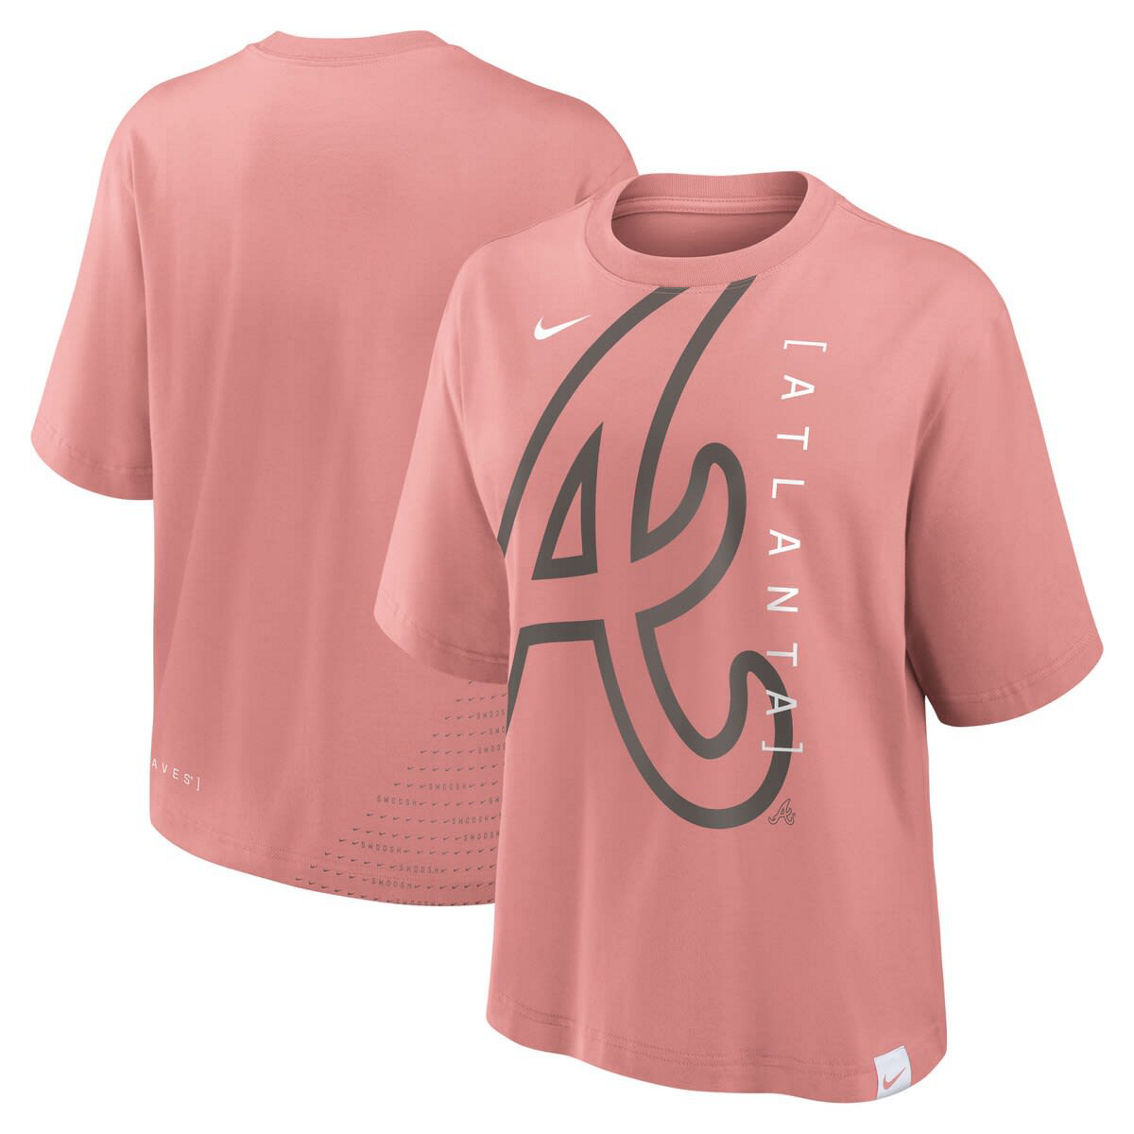 Nike Women's Pink Atlanta Braves Statement Boxy T-Shirt - Image 2 of 4